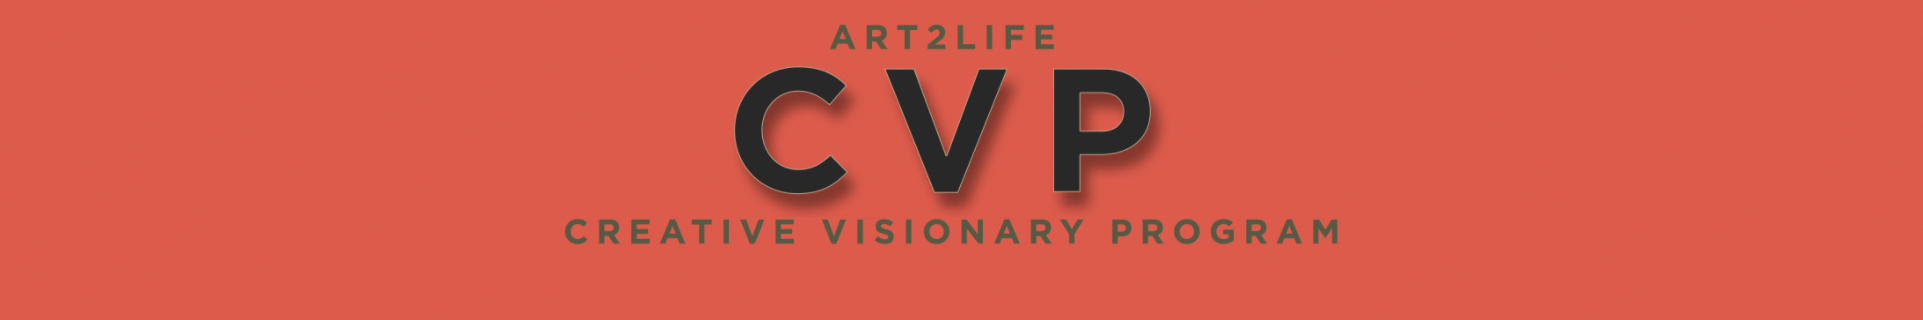 new cvp banner ver 2